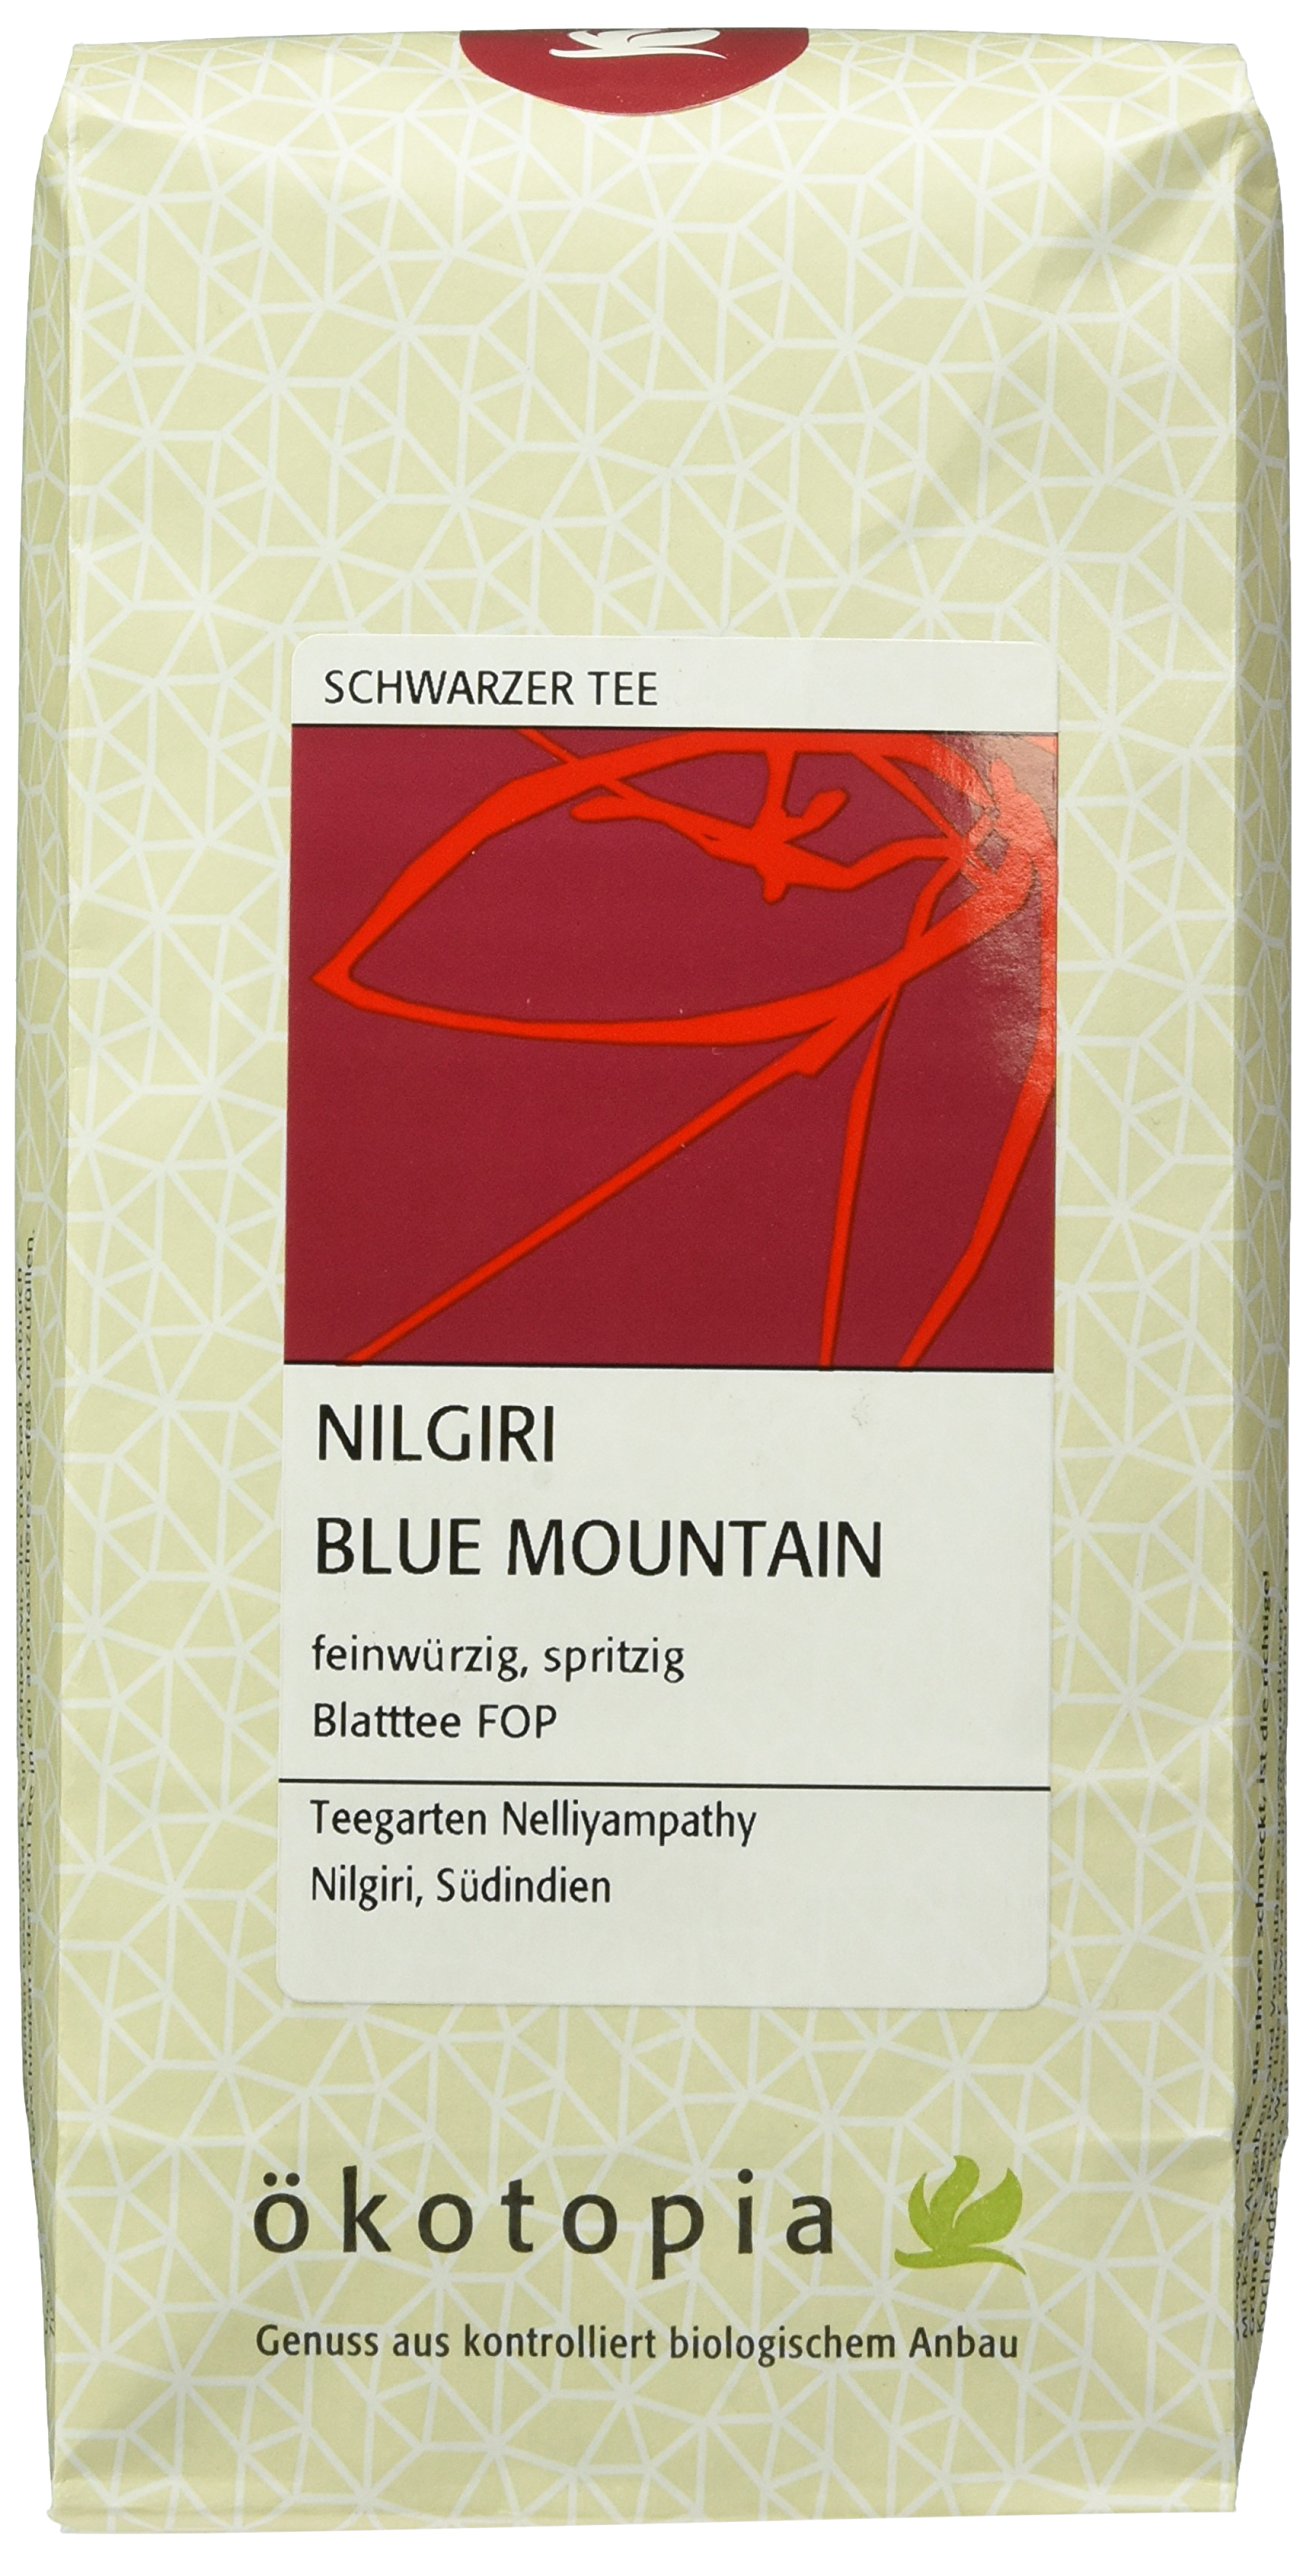 Ökotopia Schwarzer Tee Nilgiri Blue Mountain, 5er Pack (5 x 200 g)